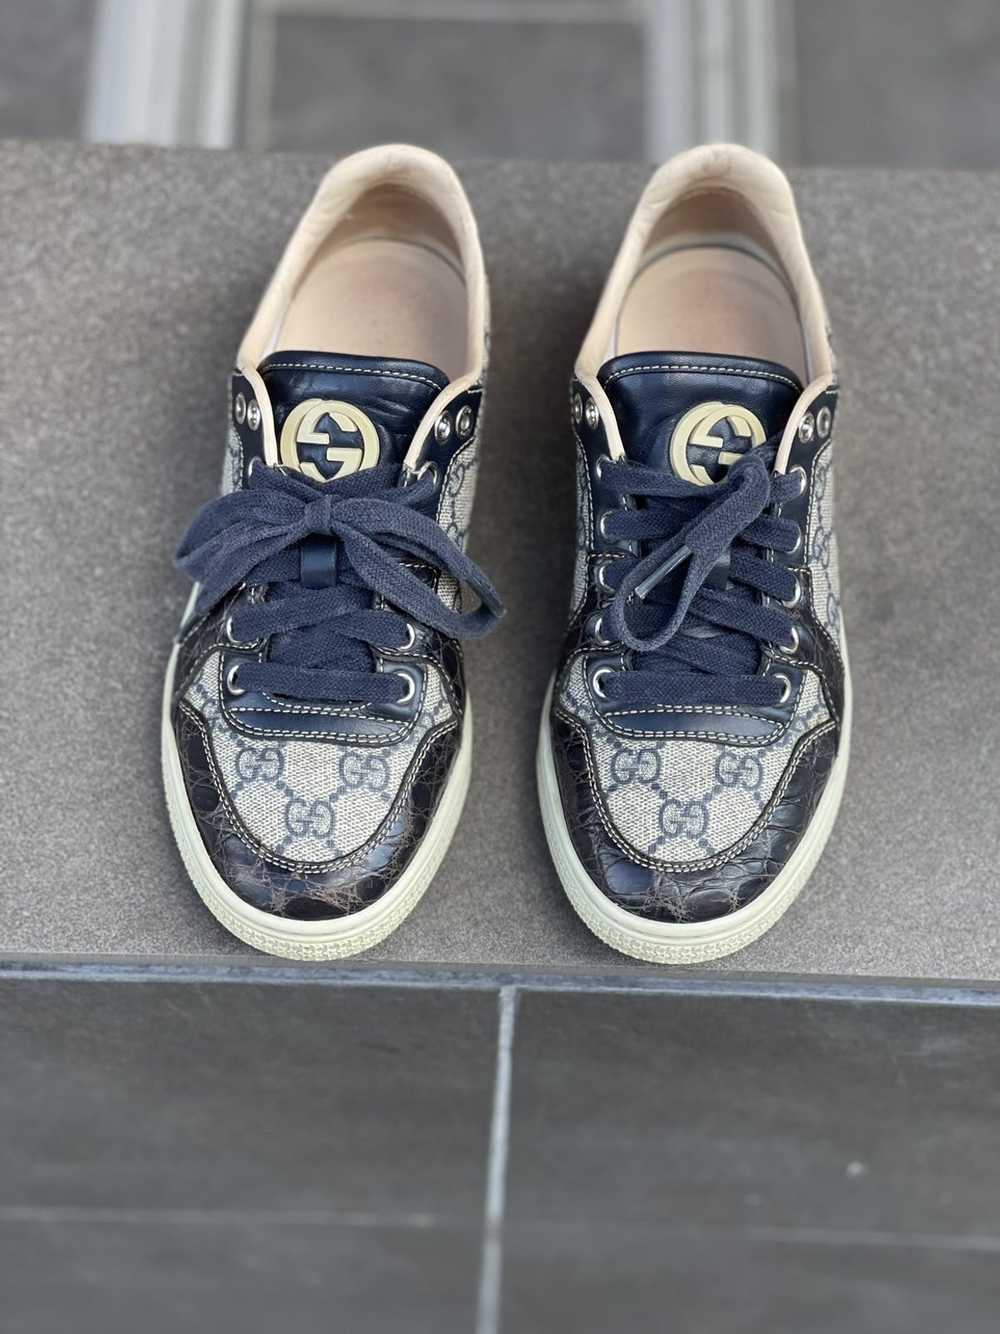 Gucci Gucci monogram shoes - image 2